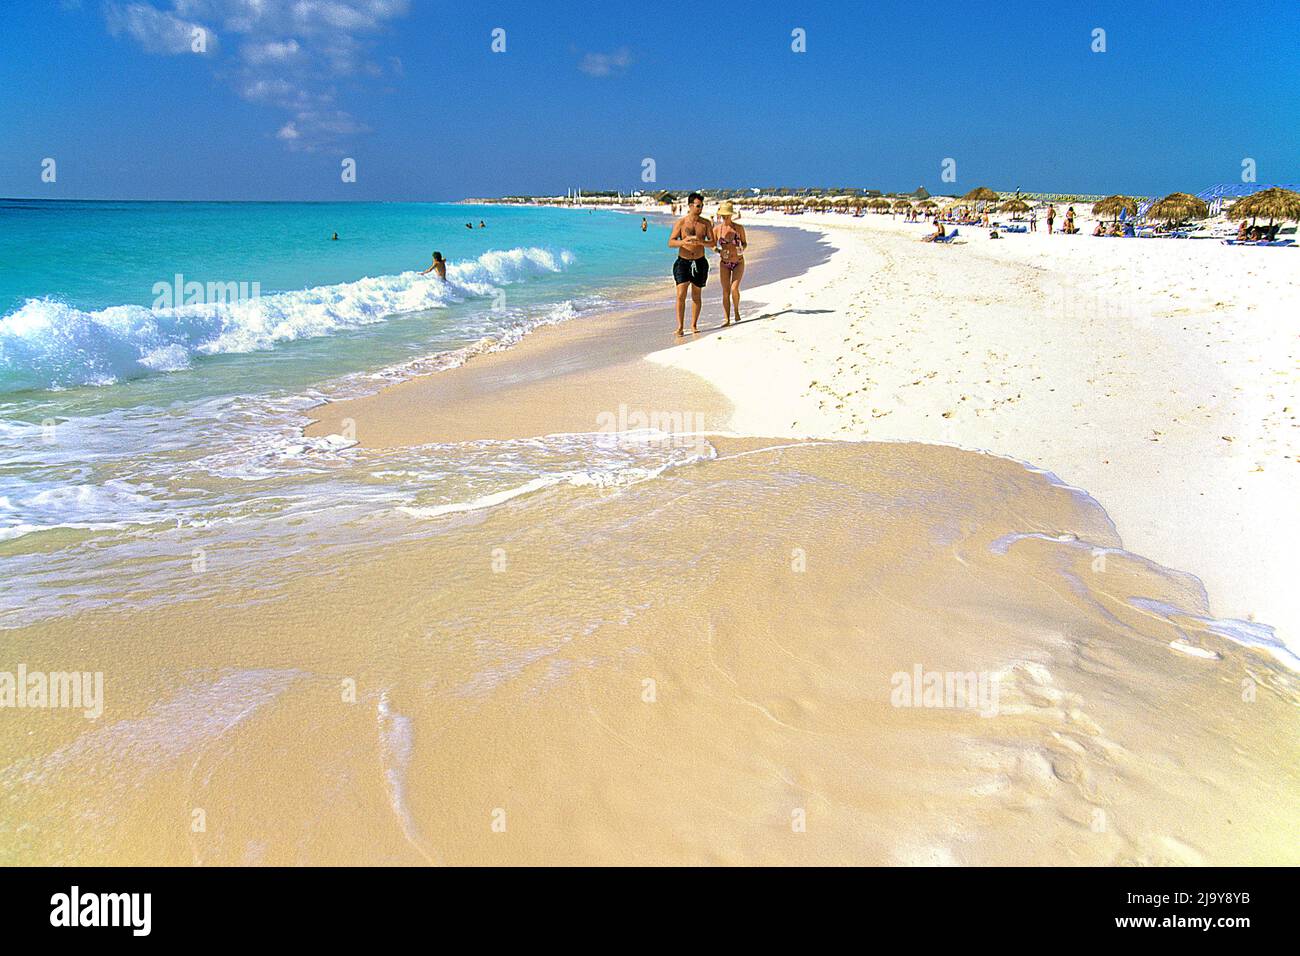 Strandleben bei Cayo Largo, Kuba, Karibik | Vida en la playa en Cayo Largo, Cuba, Caribe Foto de stock